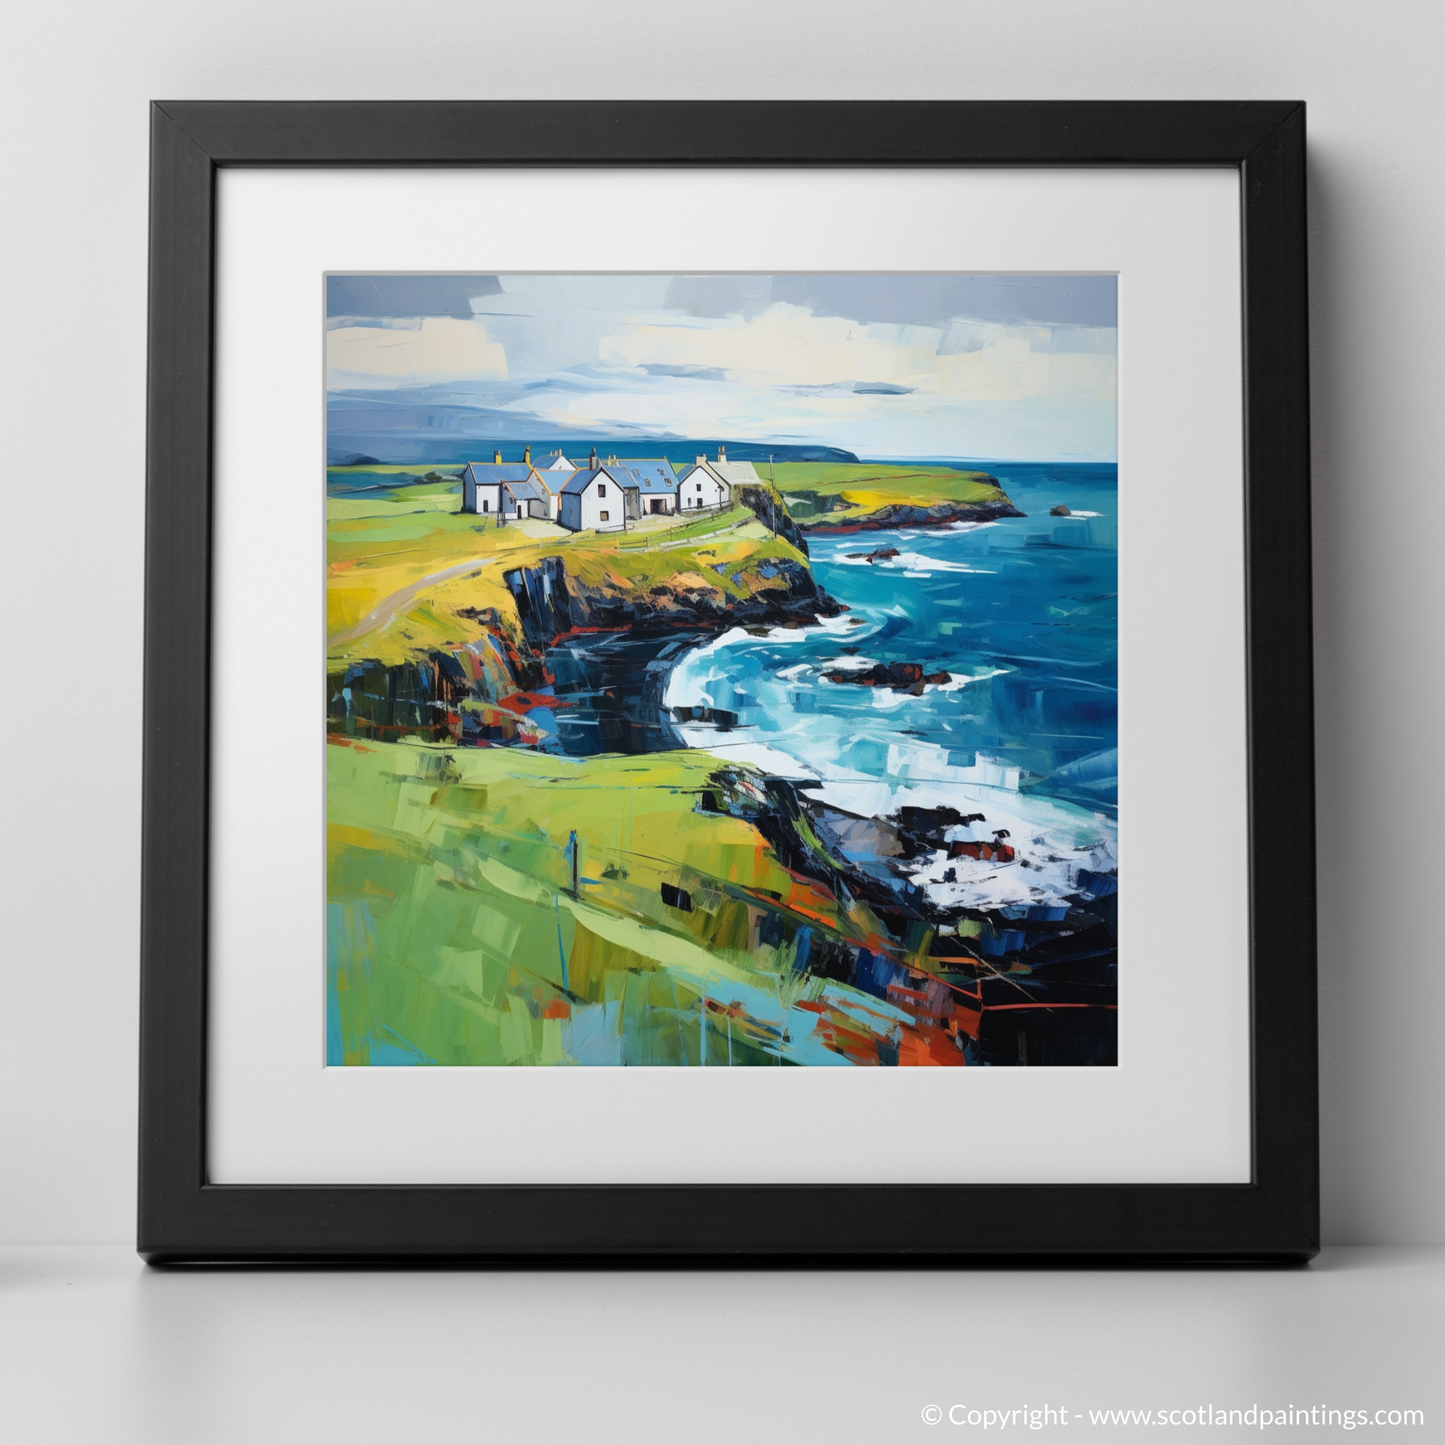 Art Print of Shetland, North of mainland Scotland with a black frame